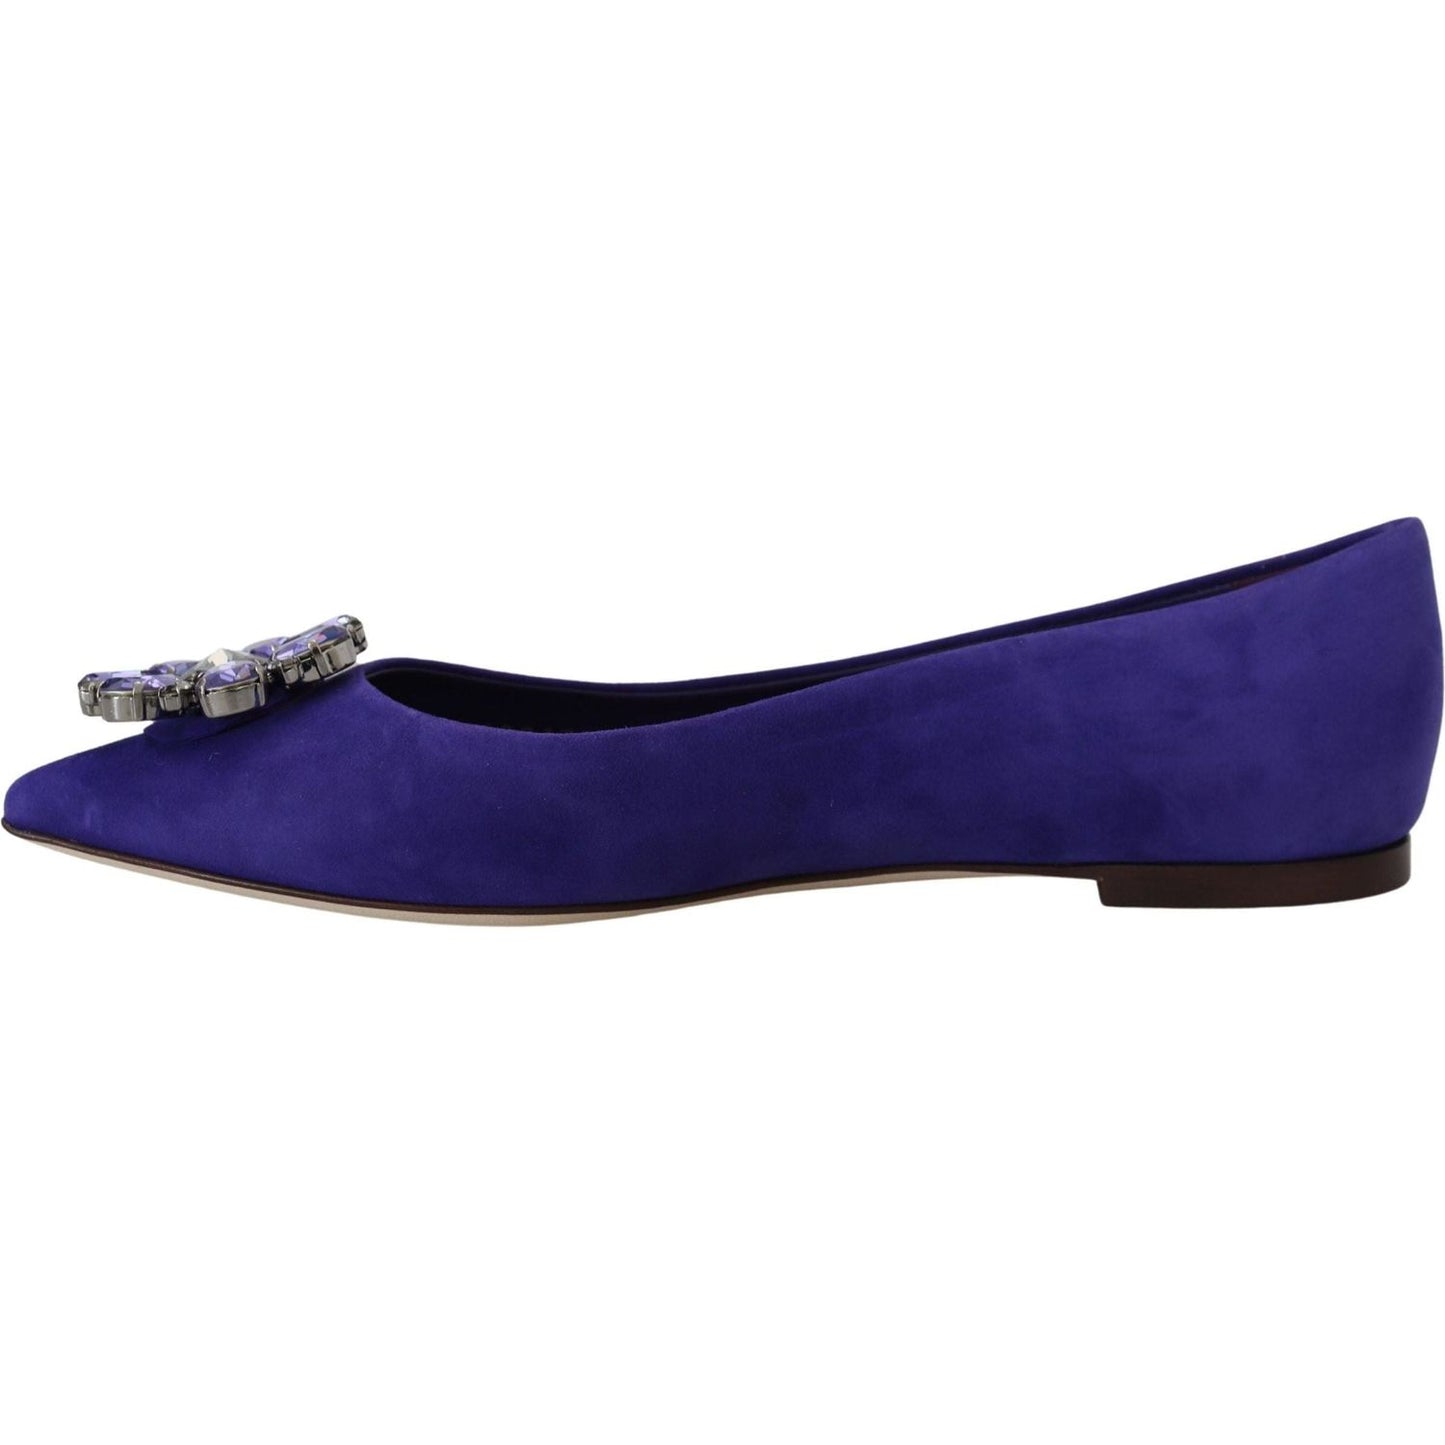 Dolce & Gabbana Embellished Crystal Purple Suede Flats purple-suede-crystals-loafers-flats-shoes IMG_8917-scaled-c32ae8a4-1d9.jpg